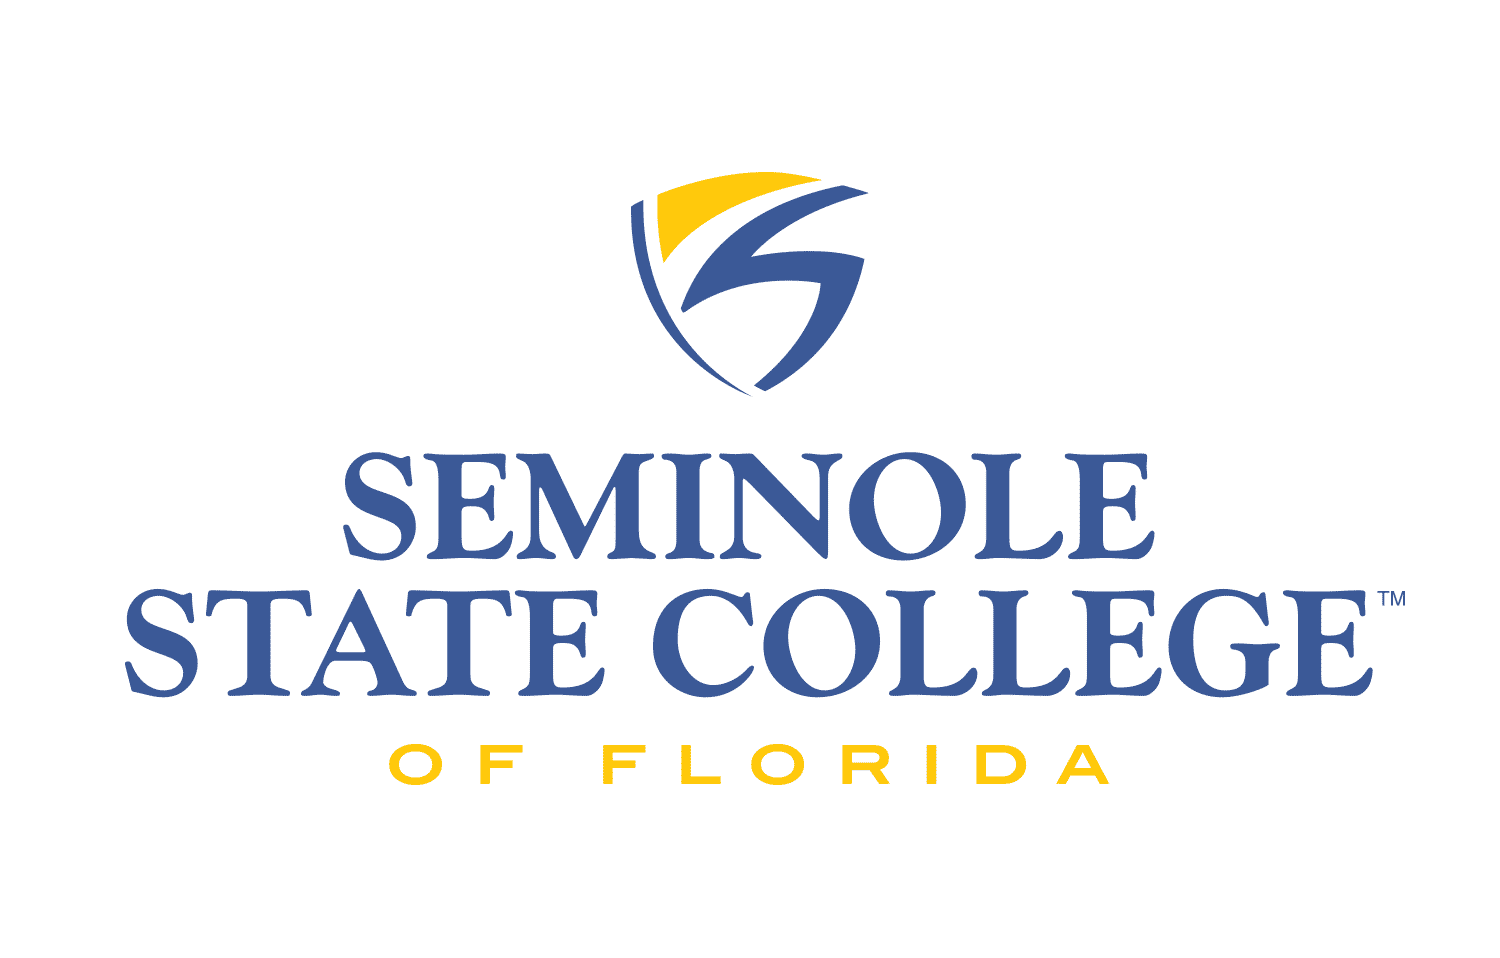 Organization logo of Seminole State College of Florida